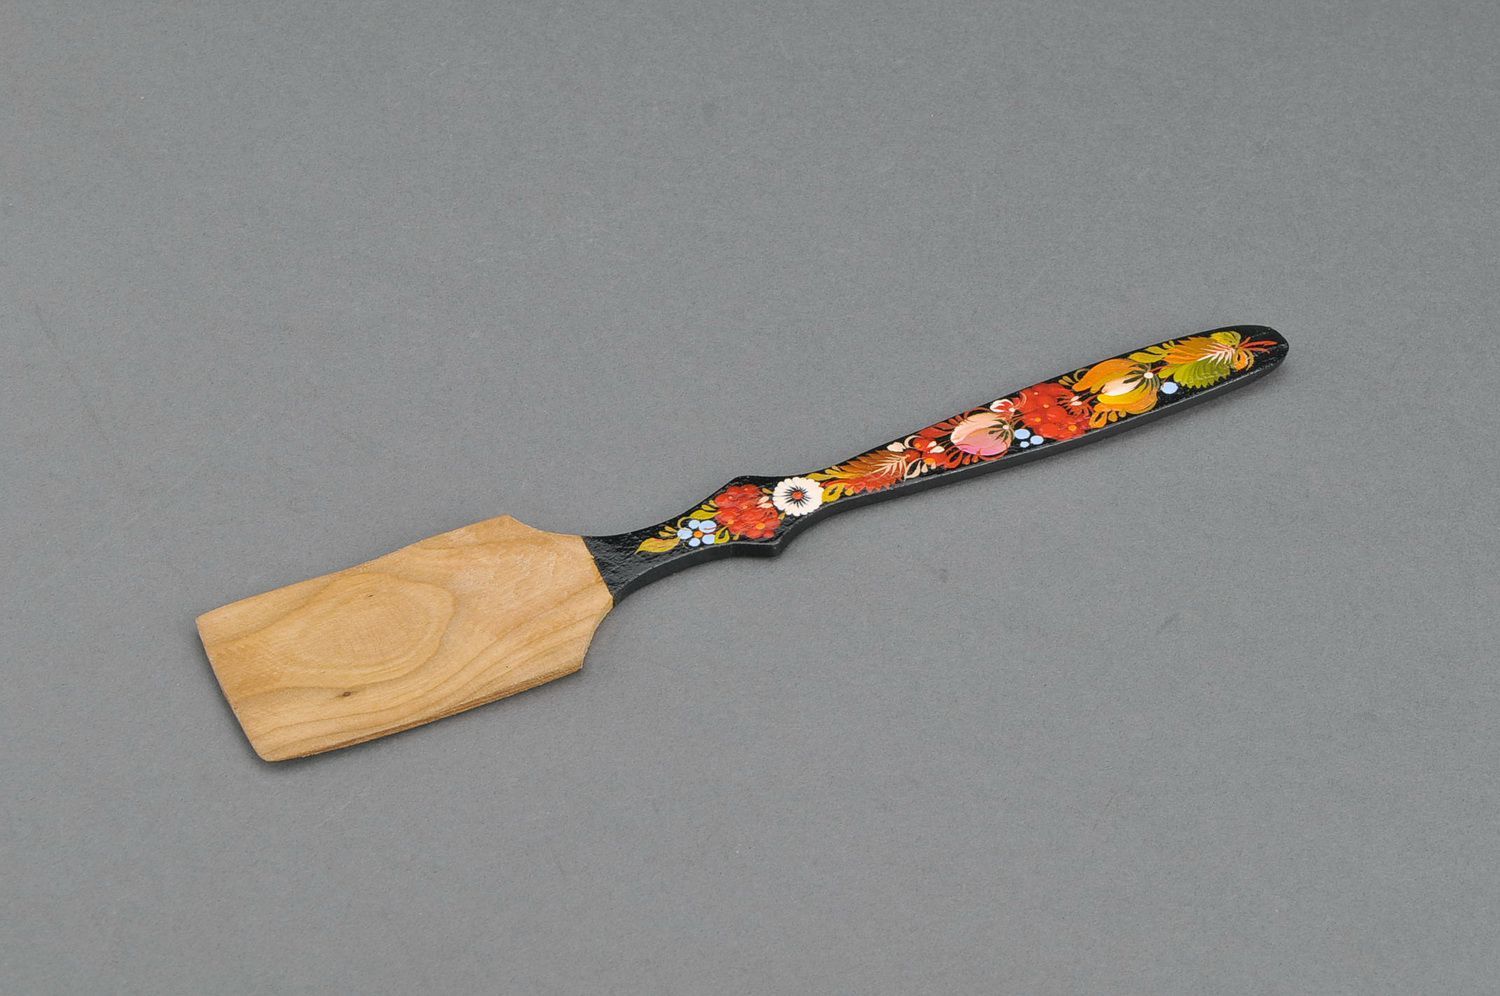 Wooden spatula photo 1